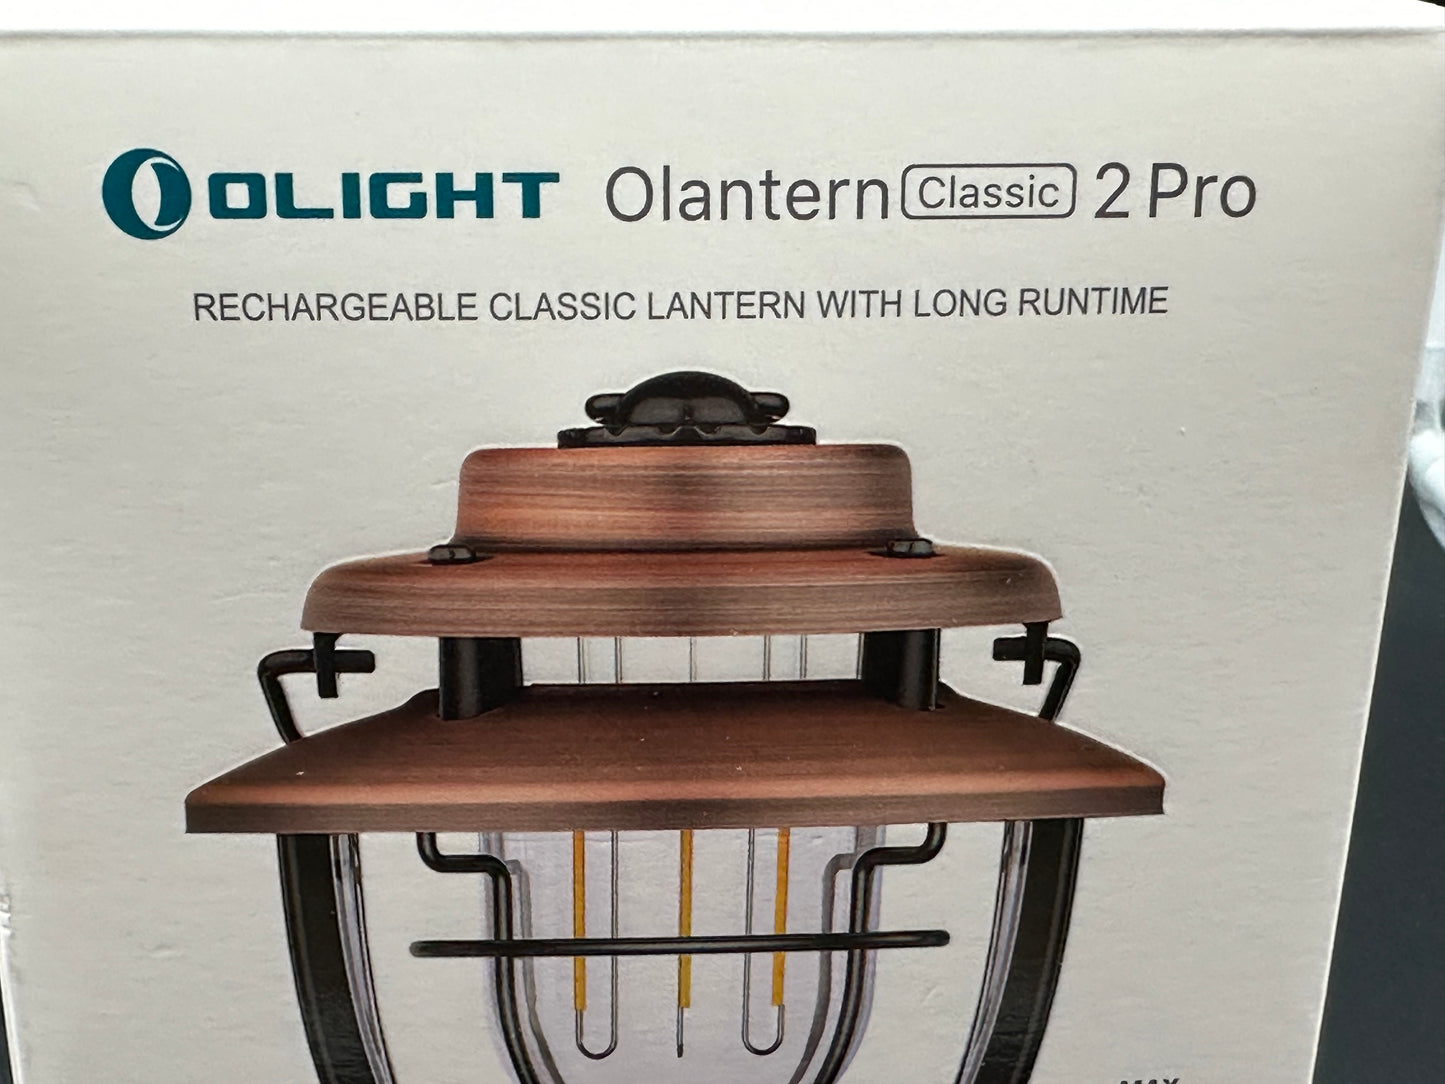 Olight Olantern Classic 2 Pro & i16 16th Anniversary flashlight bundle